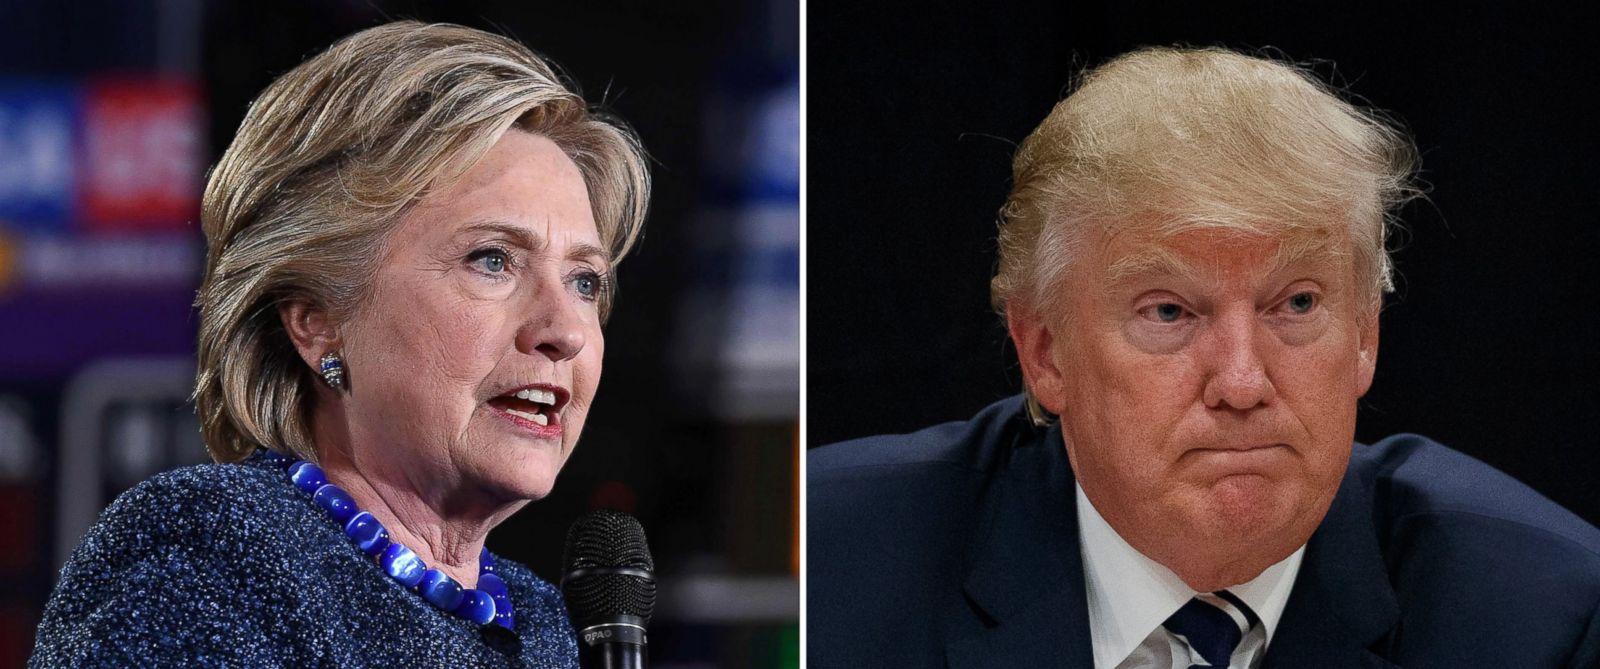 Hillary Clinton's popular vote lead over Donald Trump exceeds 1.5 million votes